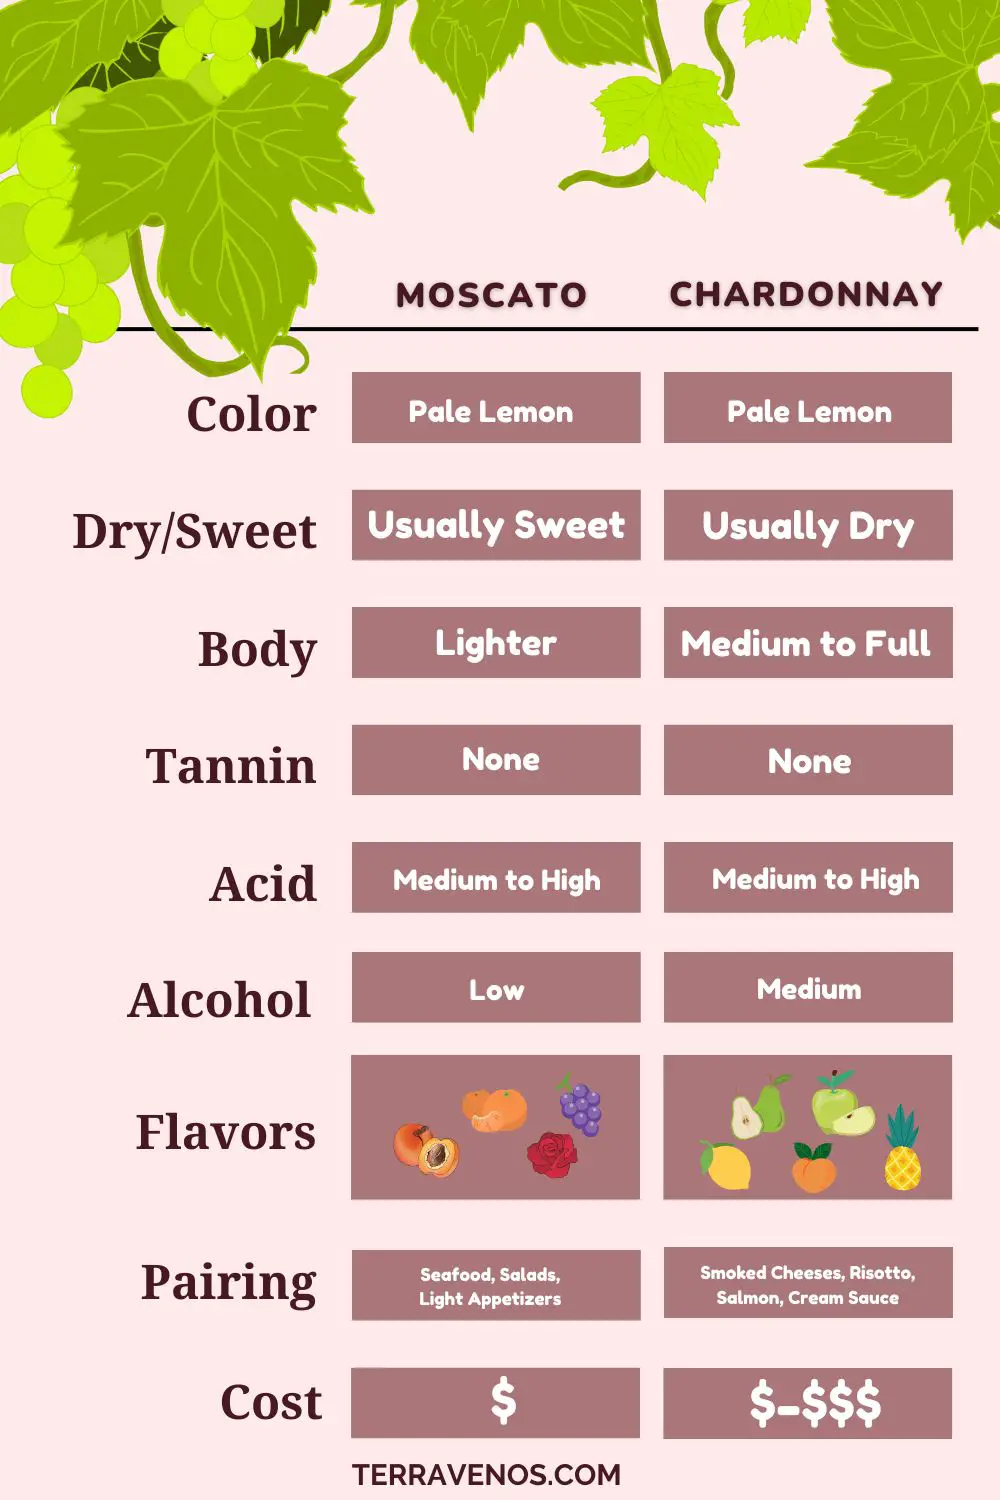 moscato-vs-chardonnnay-wine-comparison-infographic